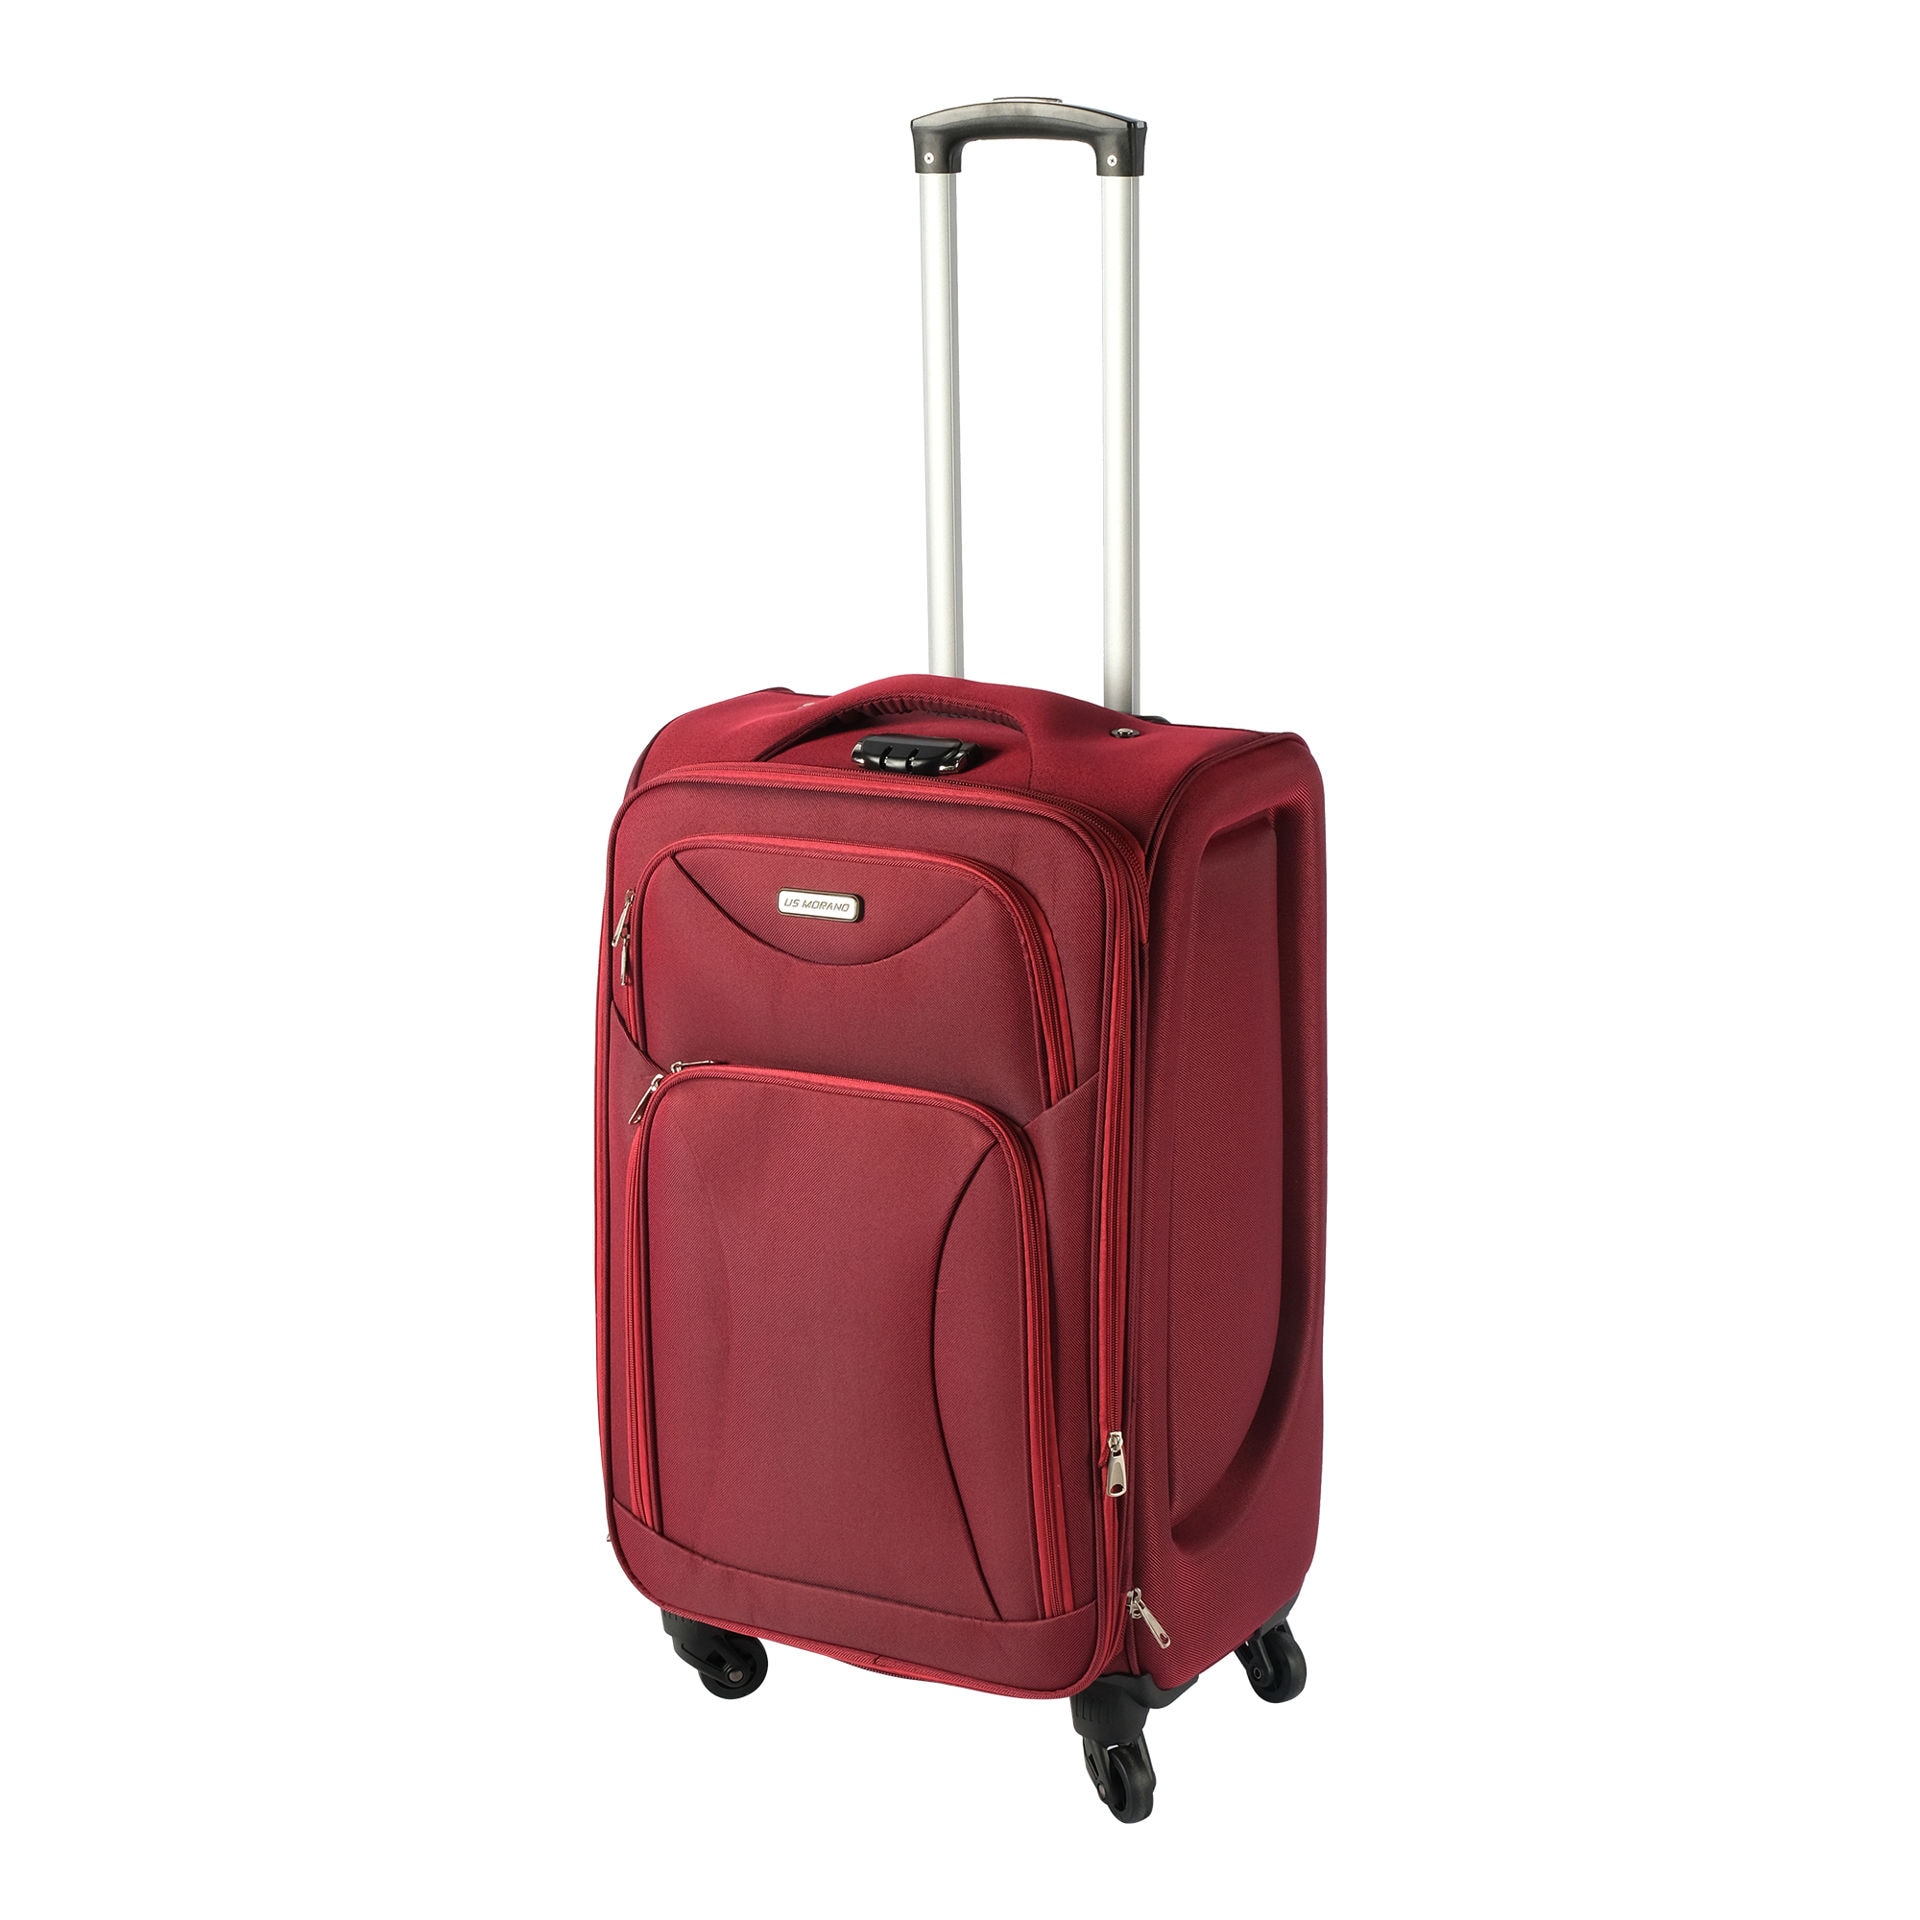 Unisex Lightweight Polypropylene Hard Luggage Luggage Set 4 Double Wheels  with Built-in TSA Lock (Set of 4), Light Green - Akyat For luggage